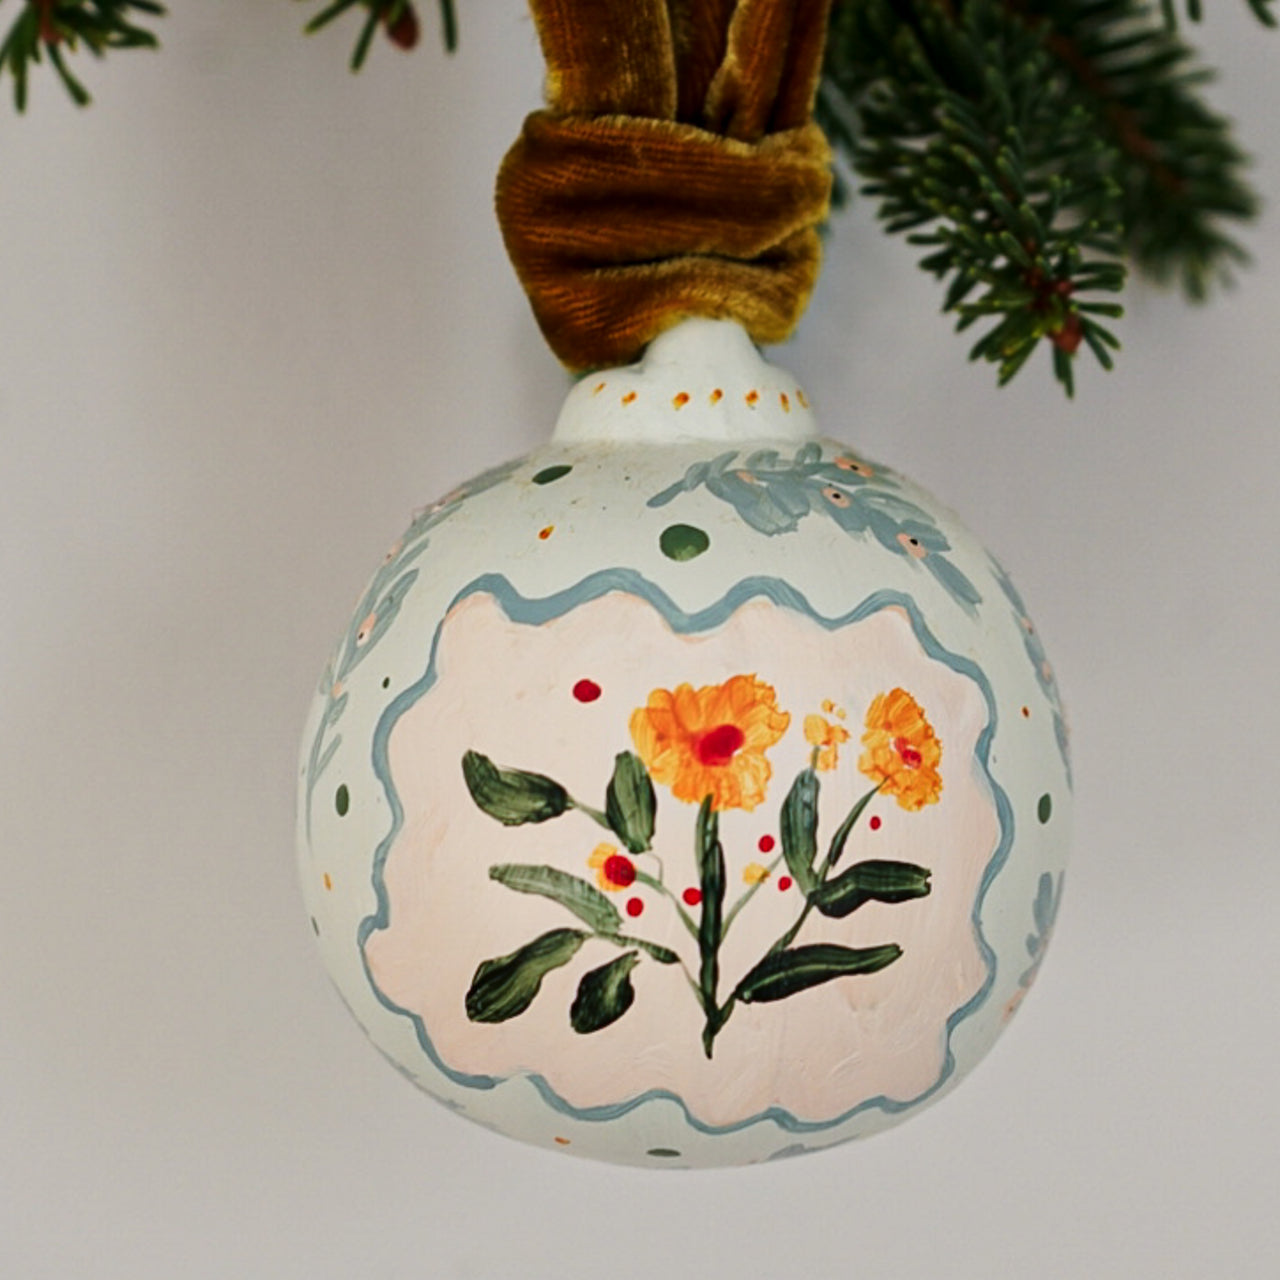 Marigold Customized Ornament